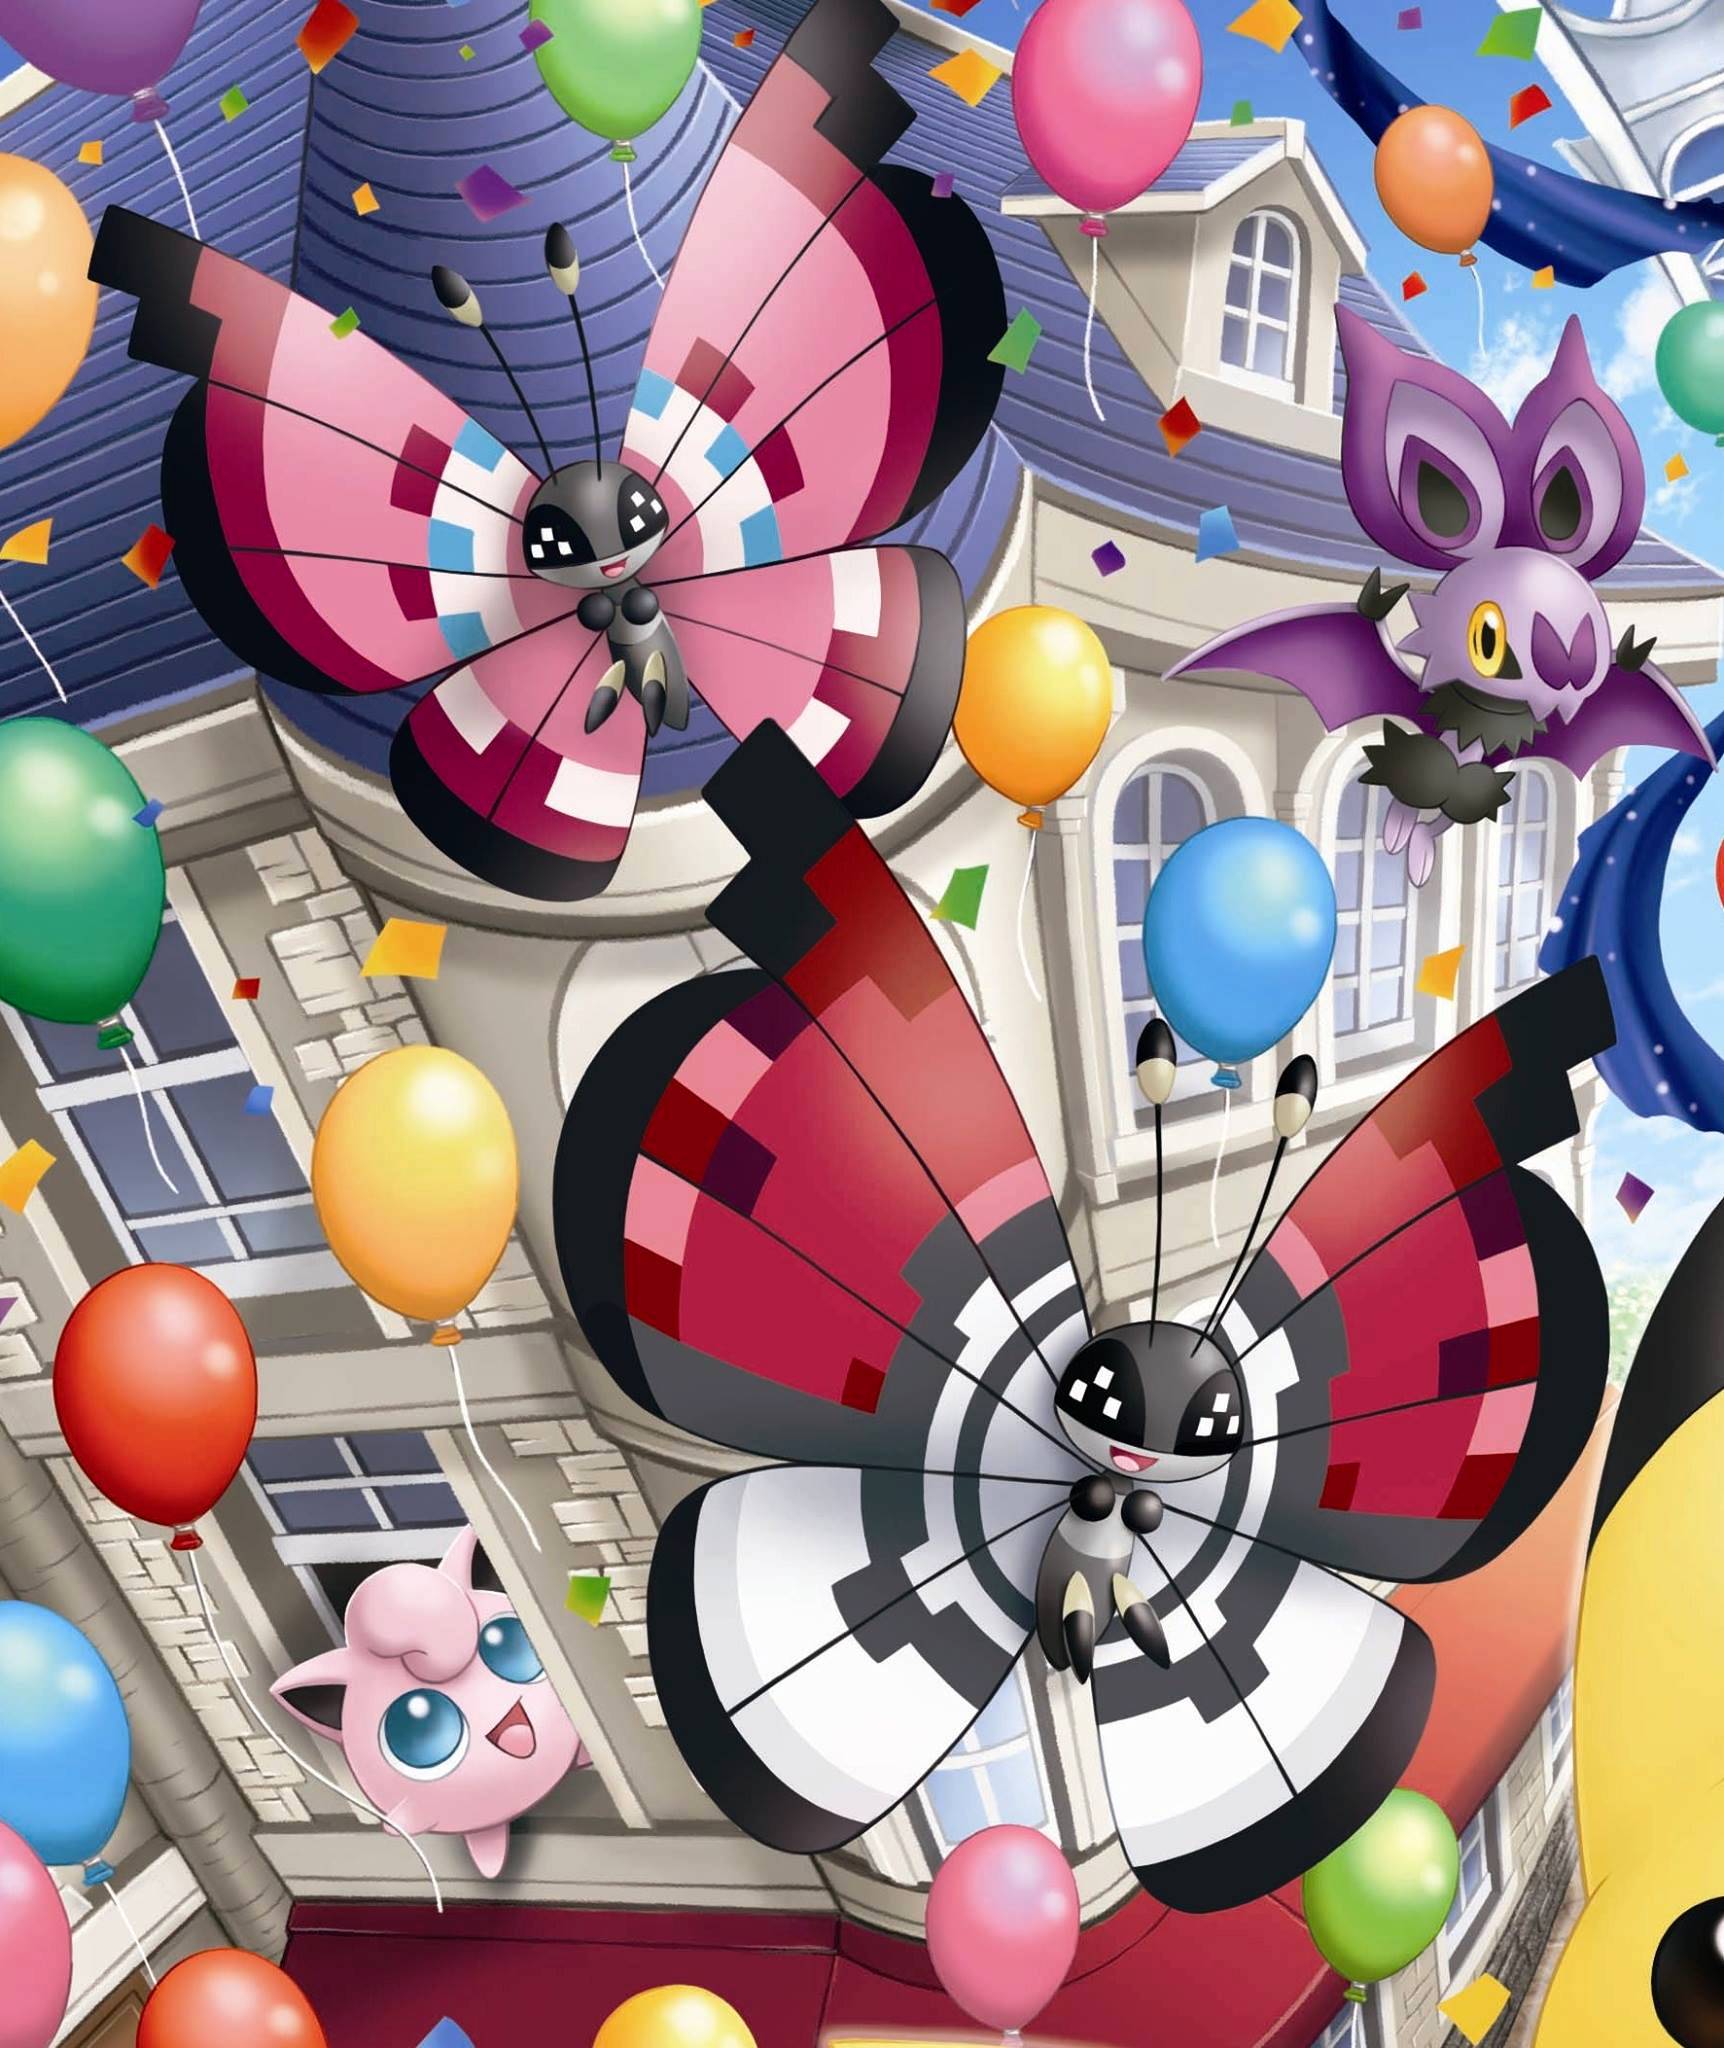 Pokémon image PokéBall Pattern Vivillon HD wallpaper and background